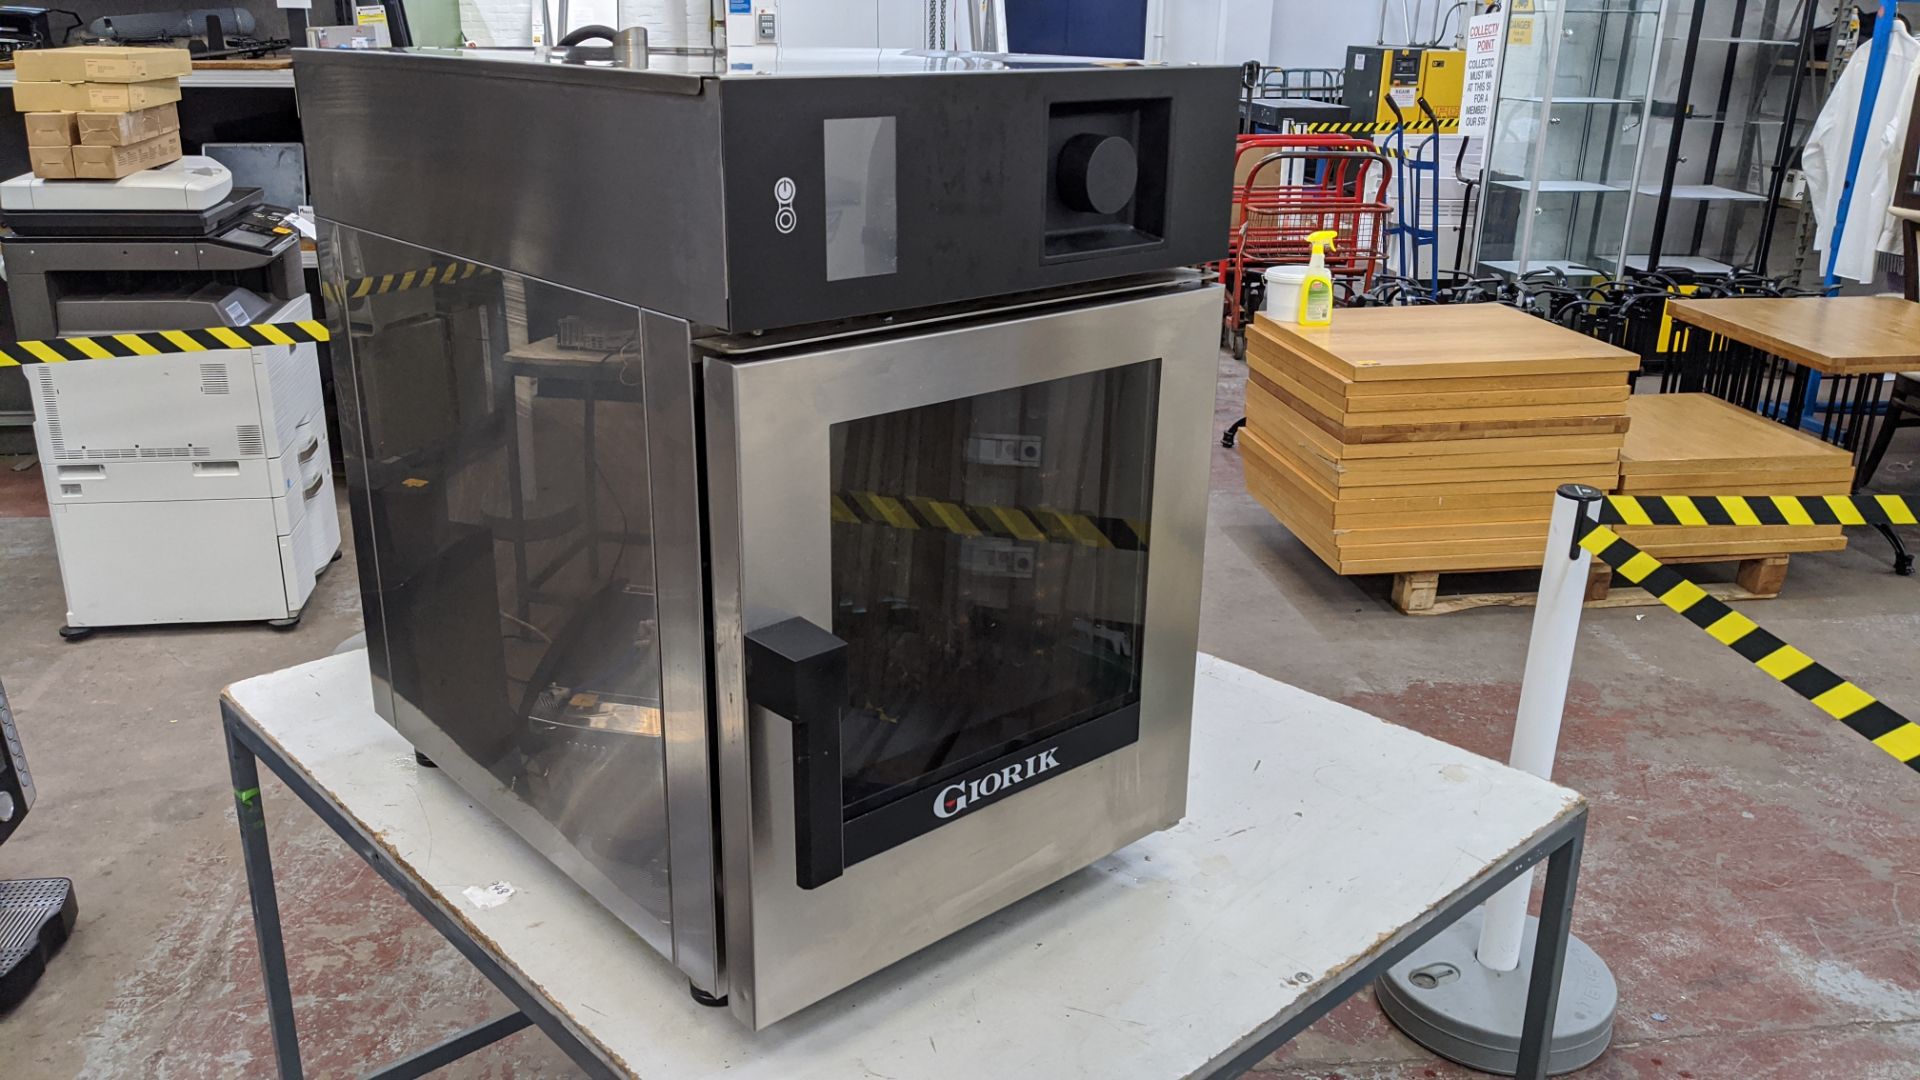 Giorik combi oven model KM061W, serial no. 005843/05/19 and calcium treatment unit Lots 18 - 21 - Image 2 of 21